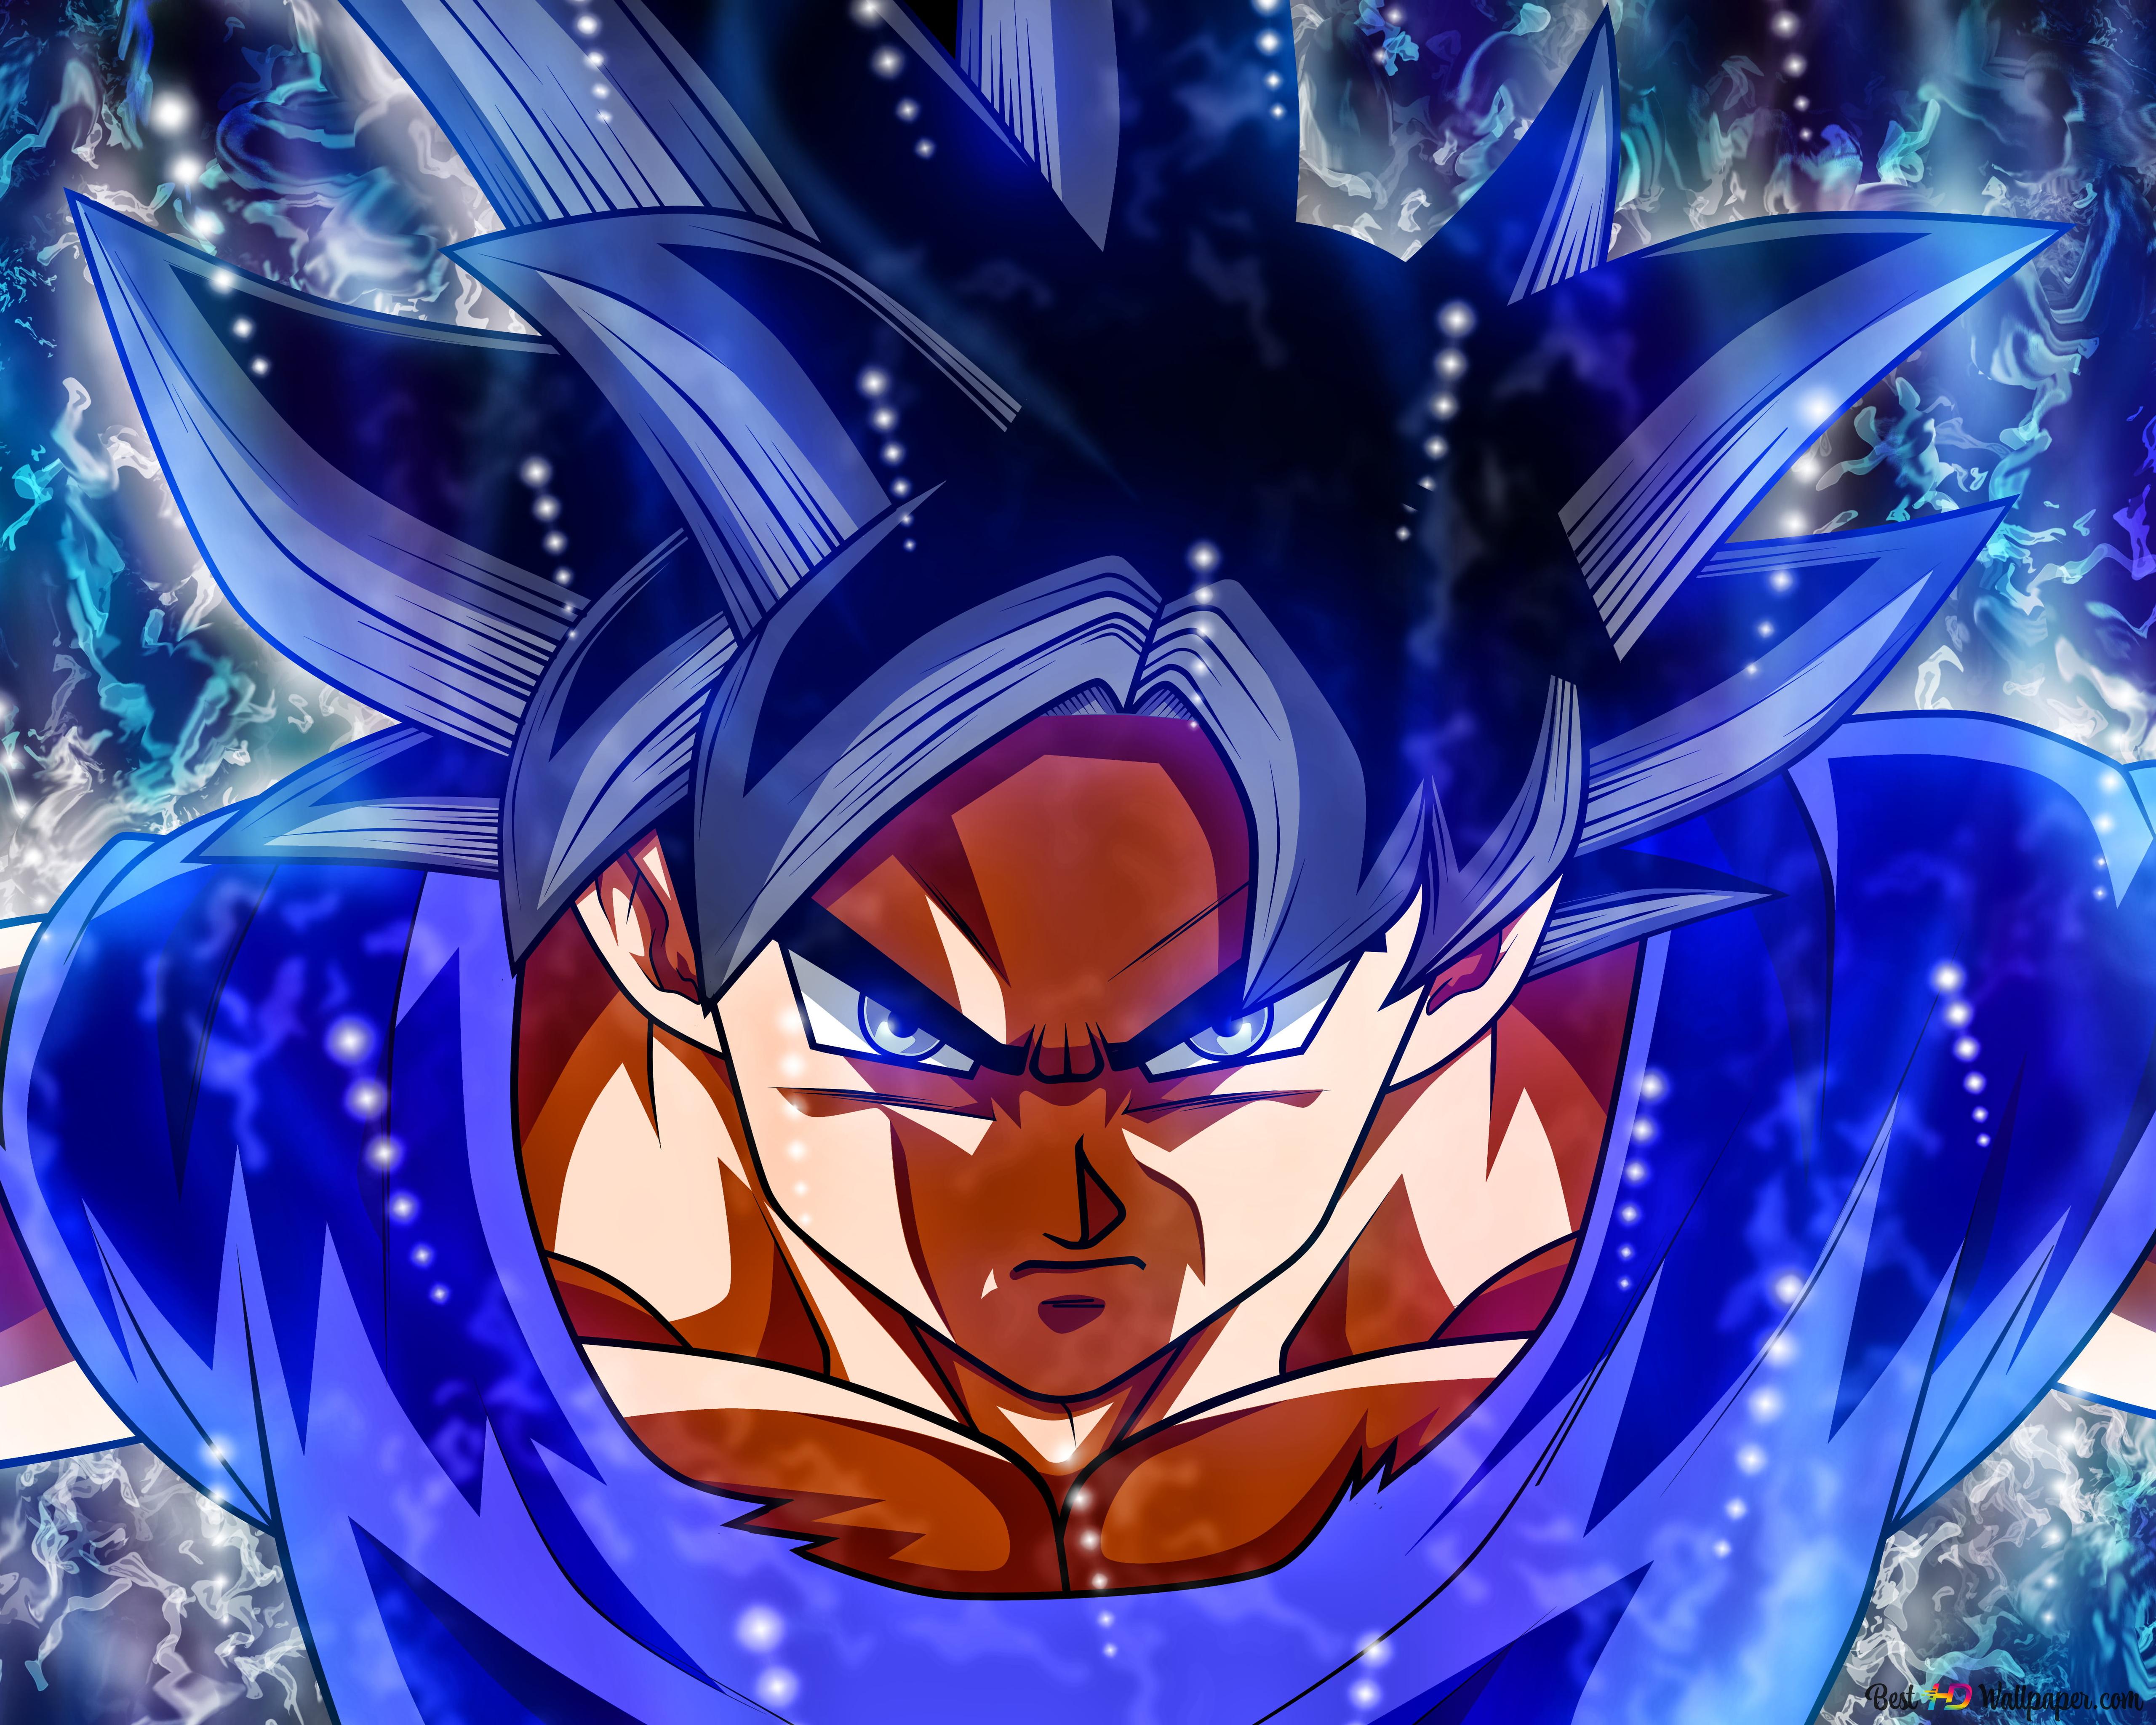 Dragon ball character goku with blue hair k wallpaper download